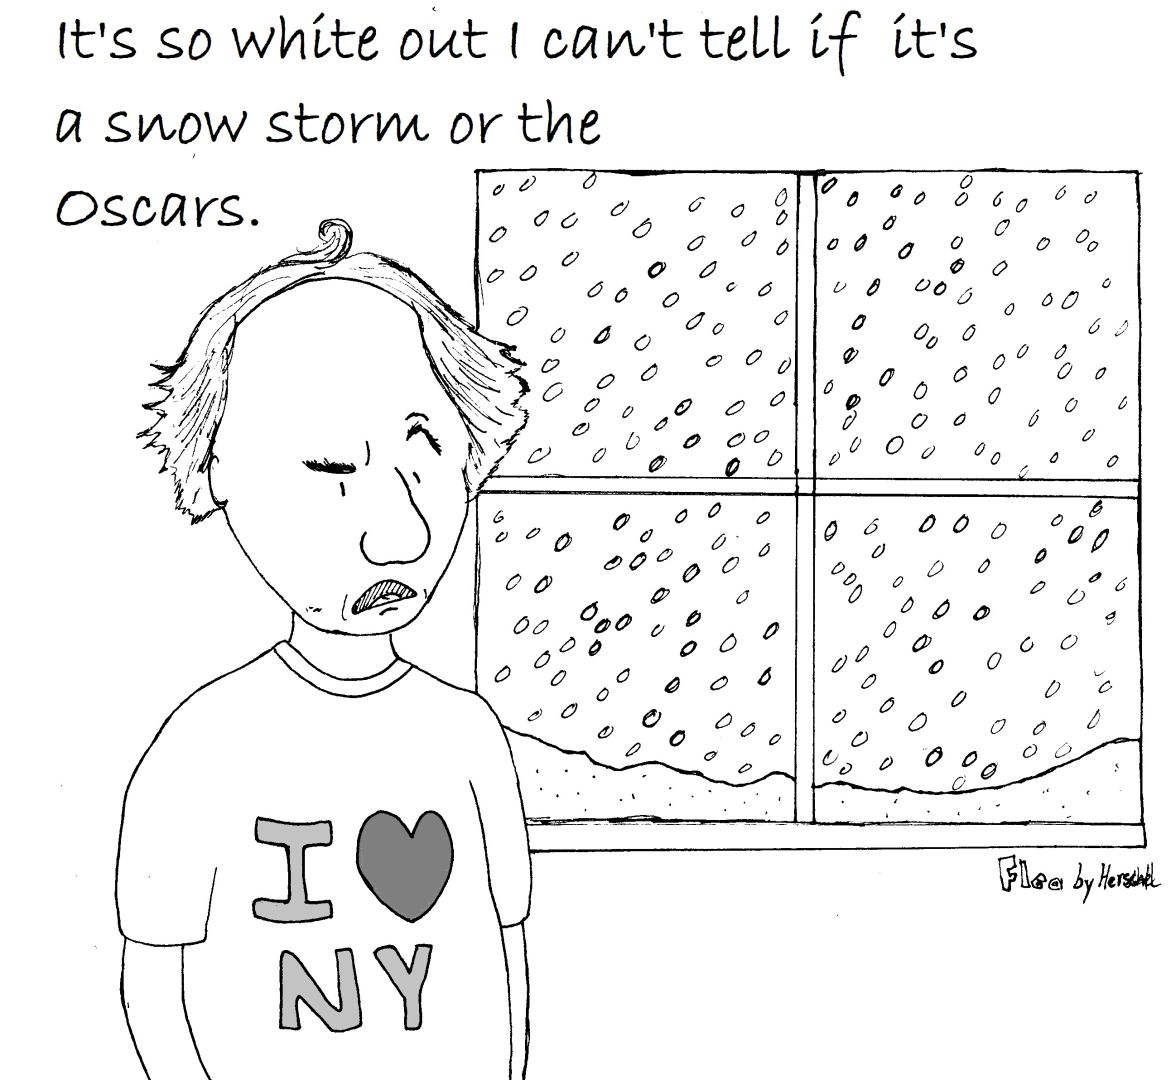 Flea Cartoon Snowstorm Oscars